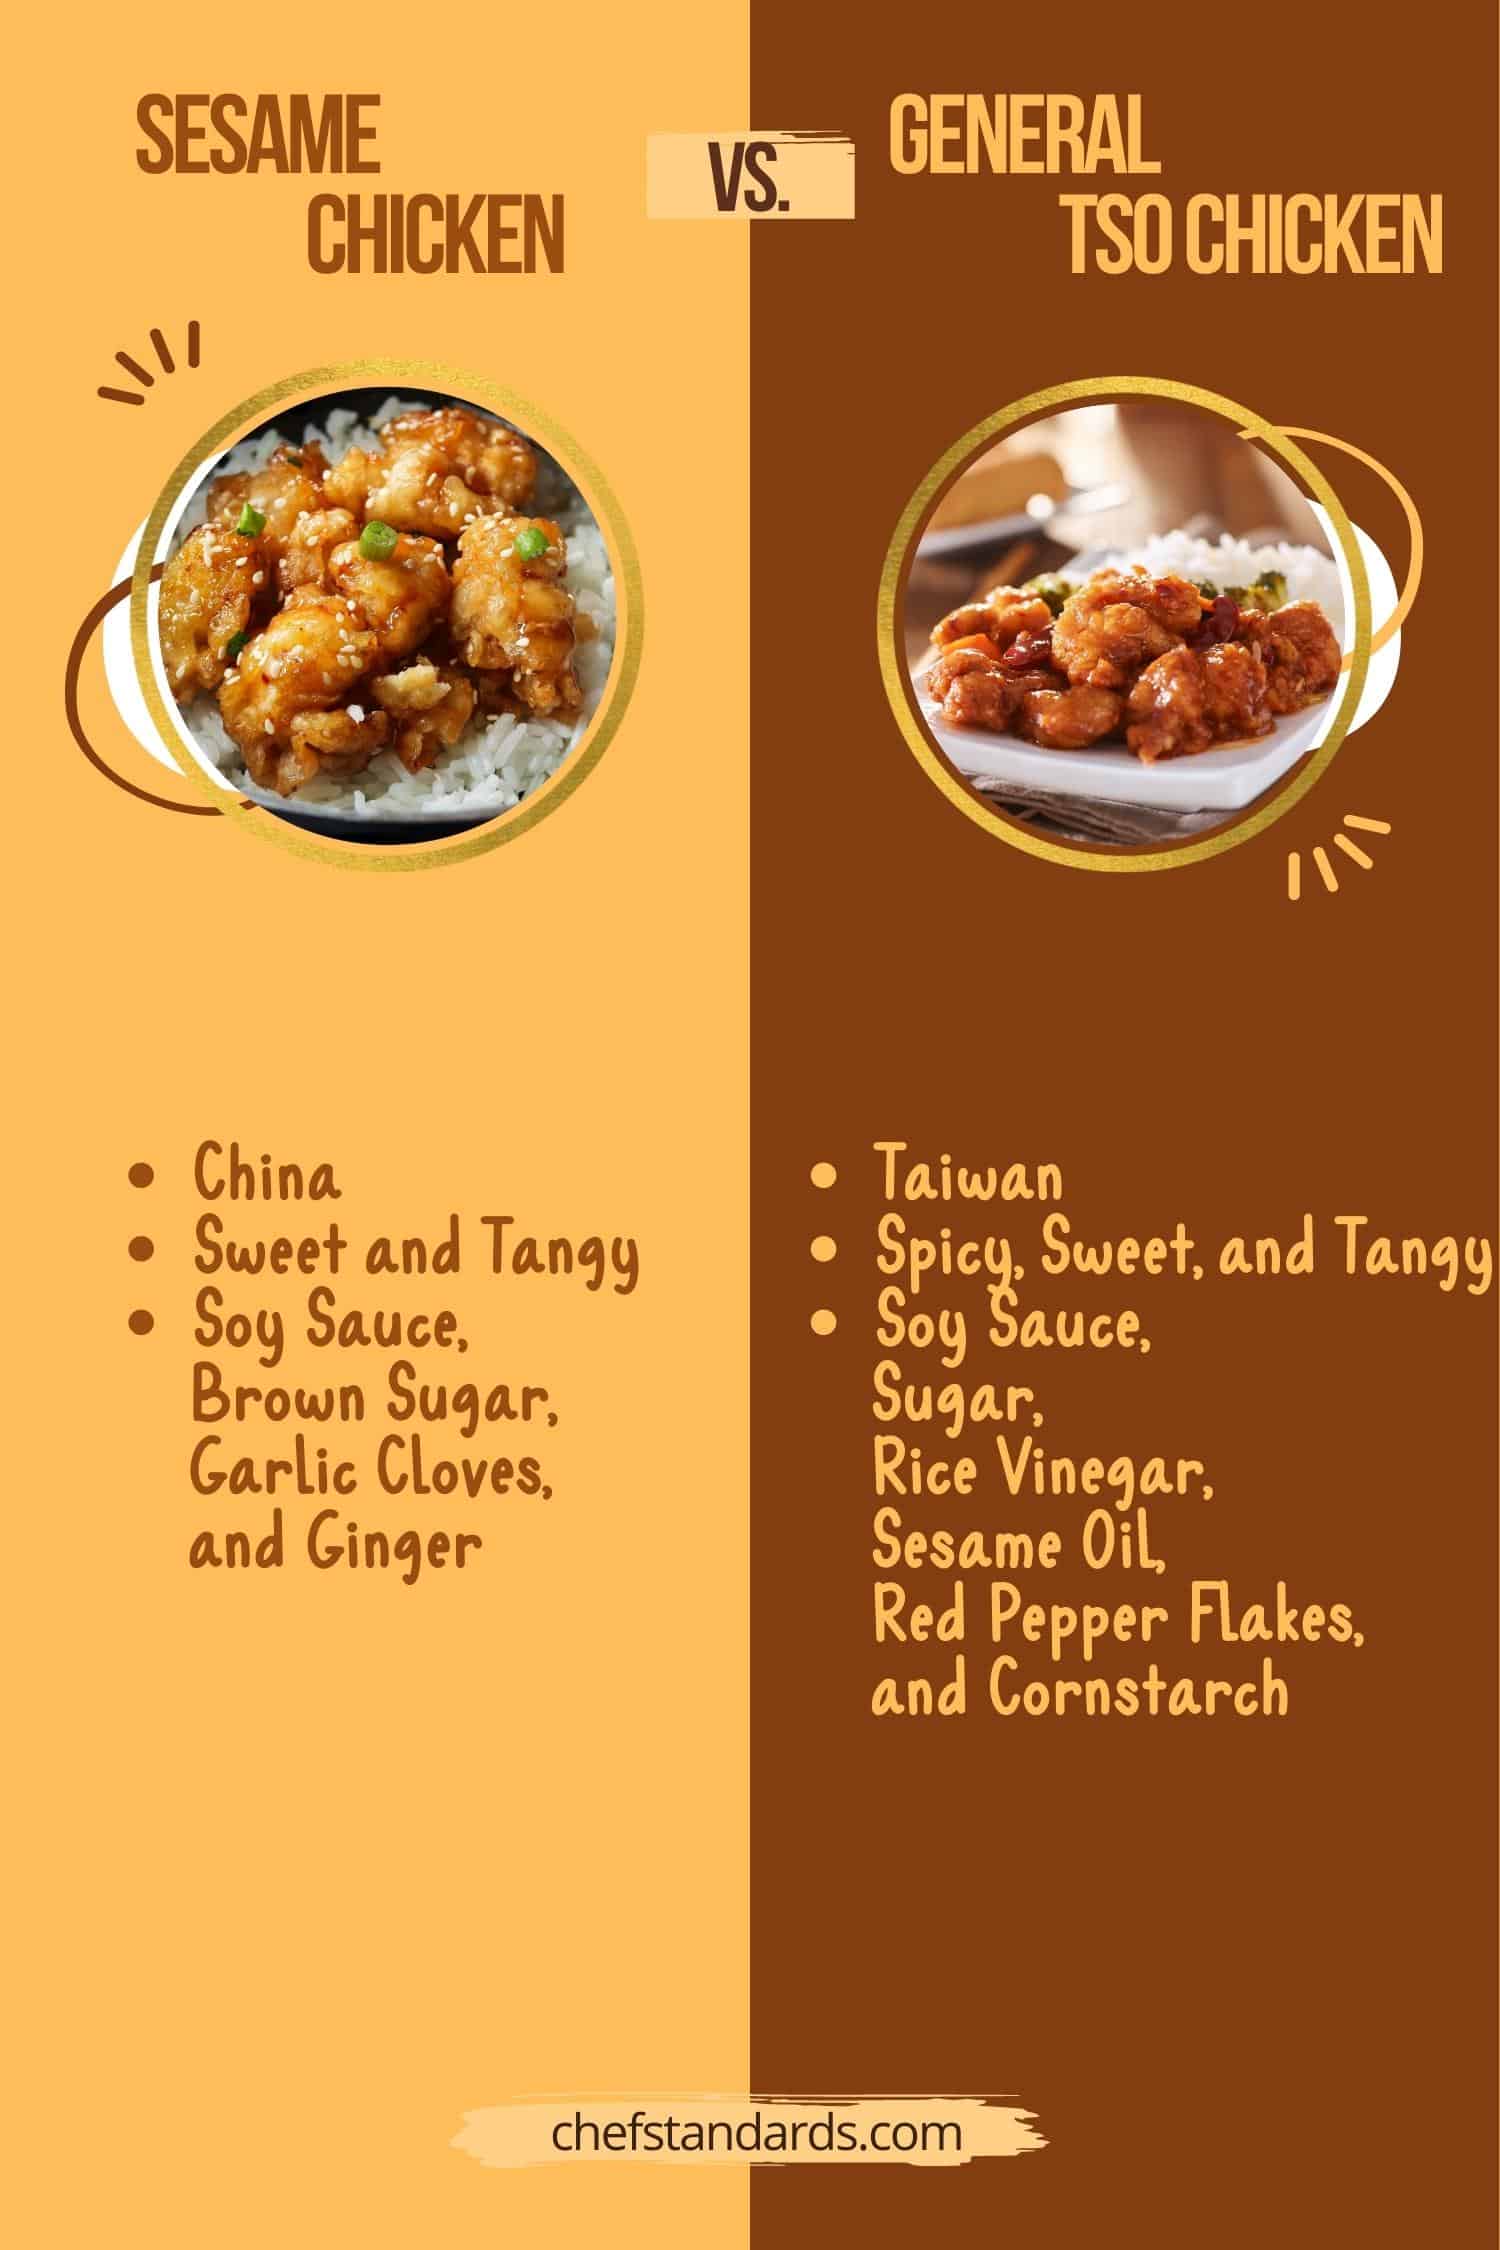 sesame chicken vs. general tso infographic